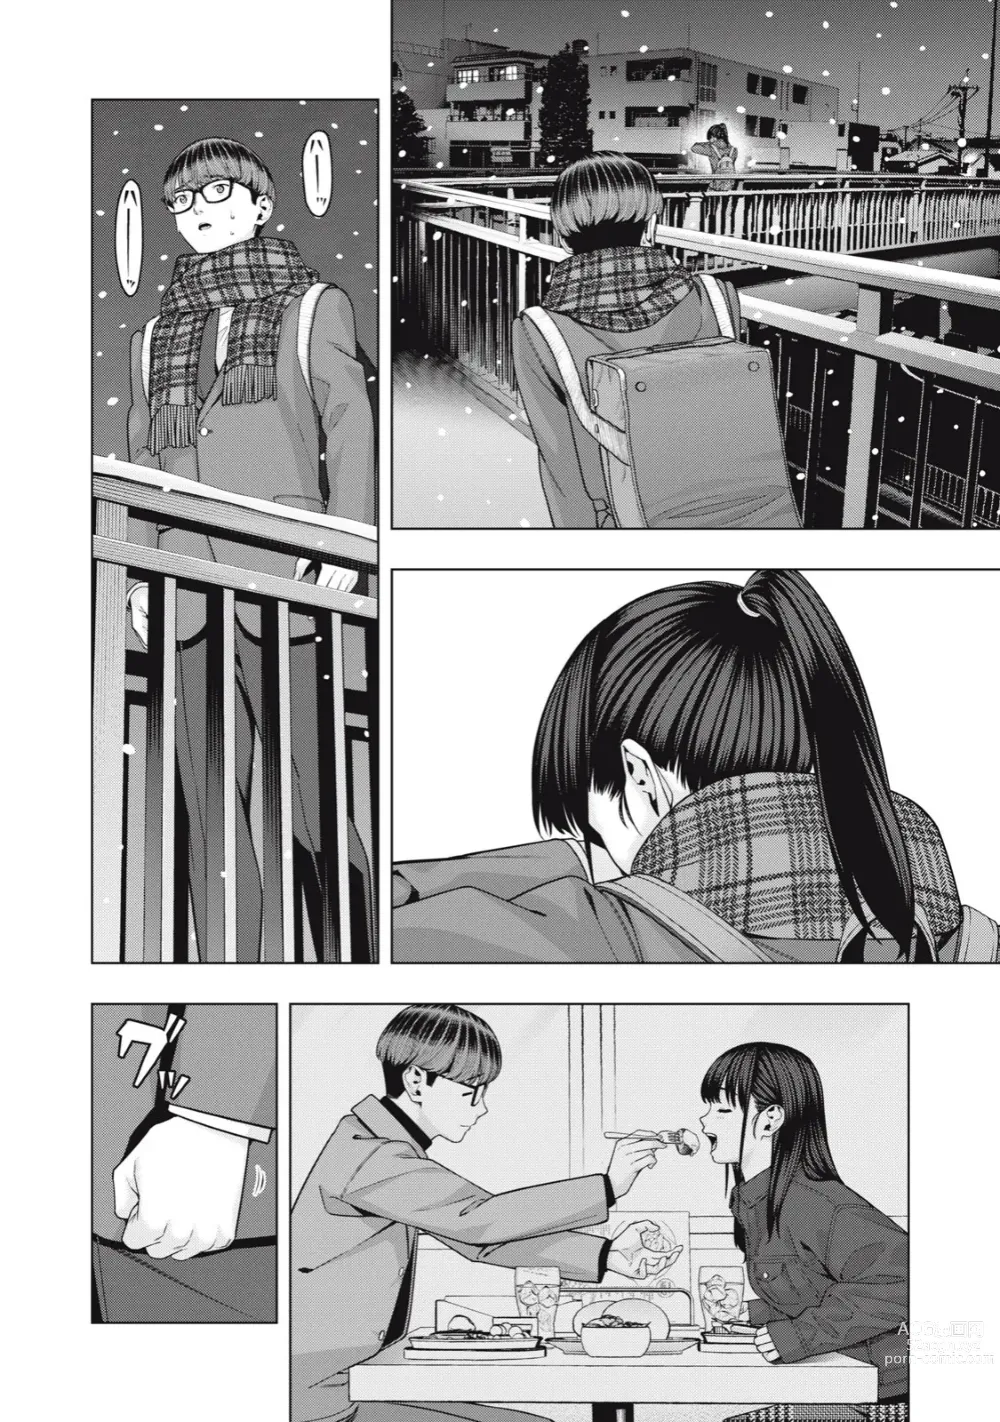 Page 588 of manga Kanojo no Tomodachi